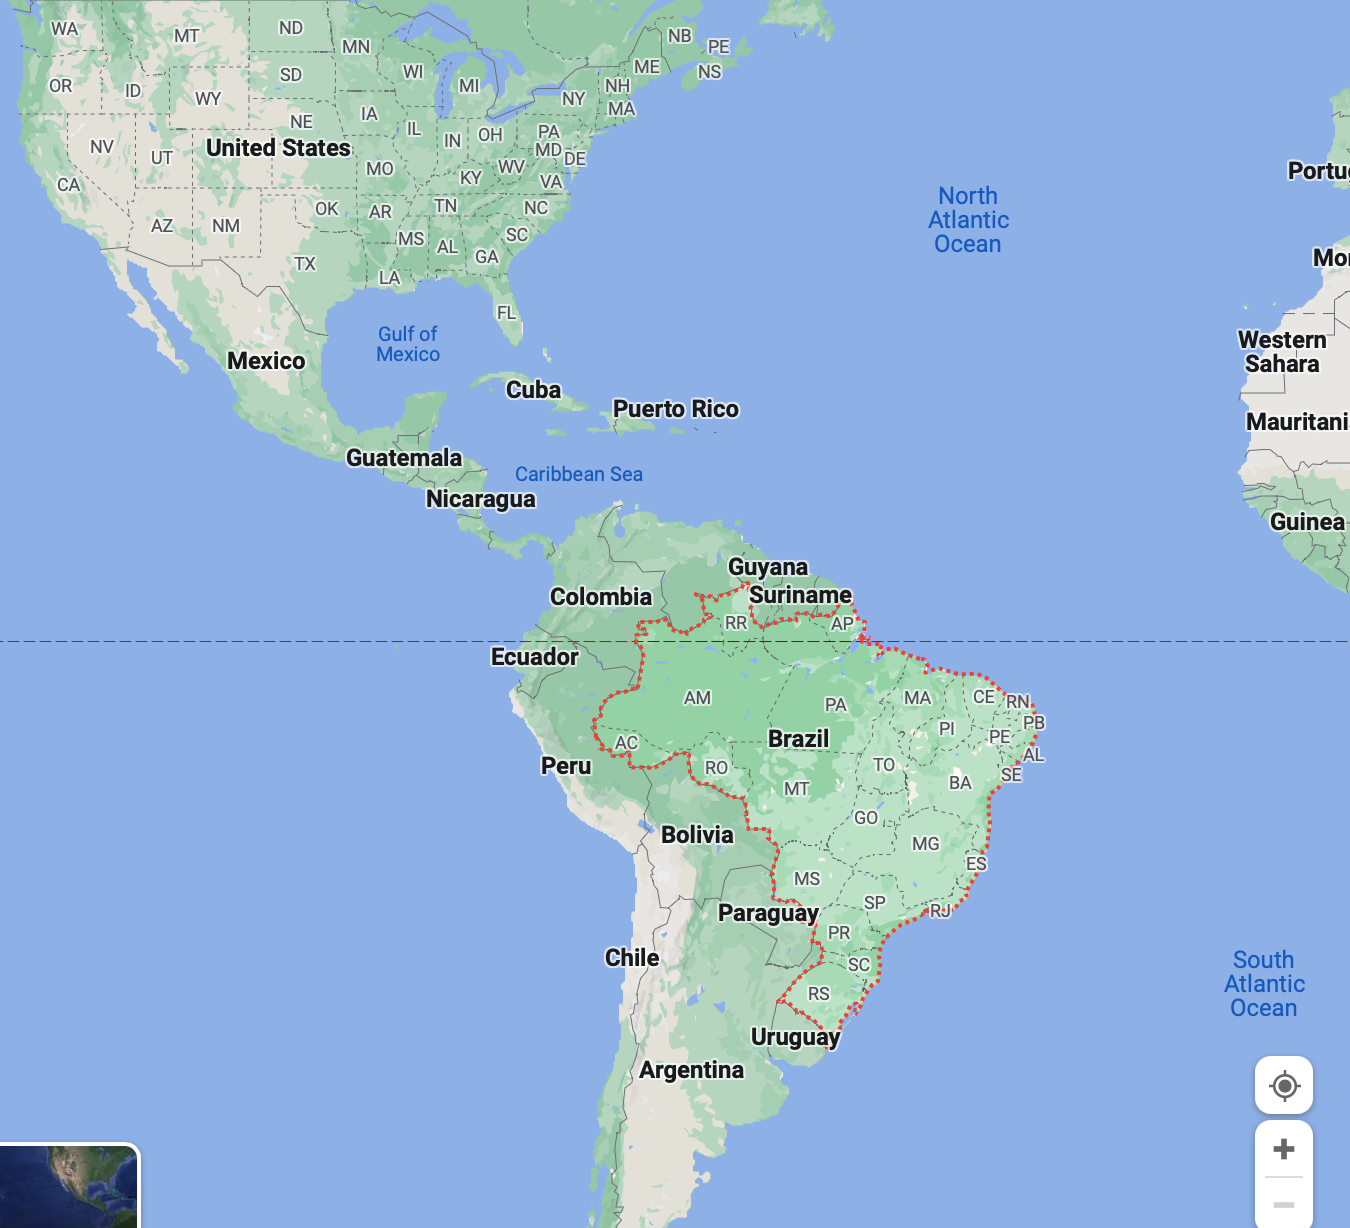 where is Brazil